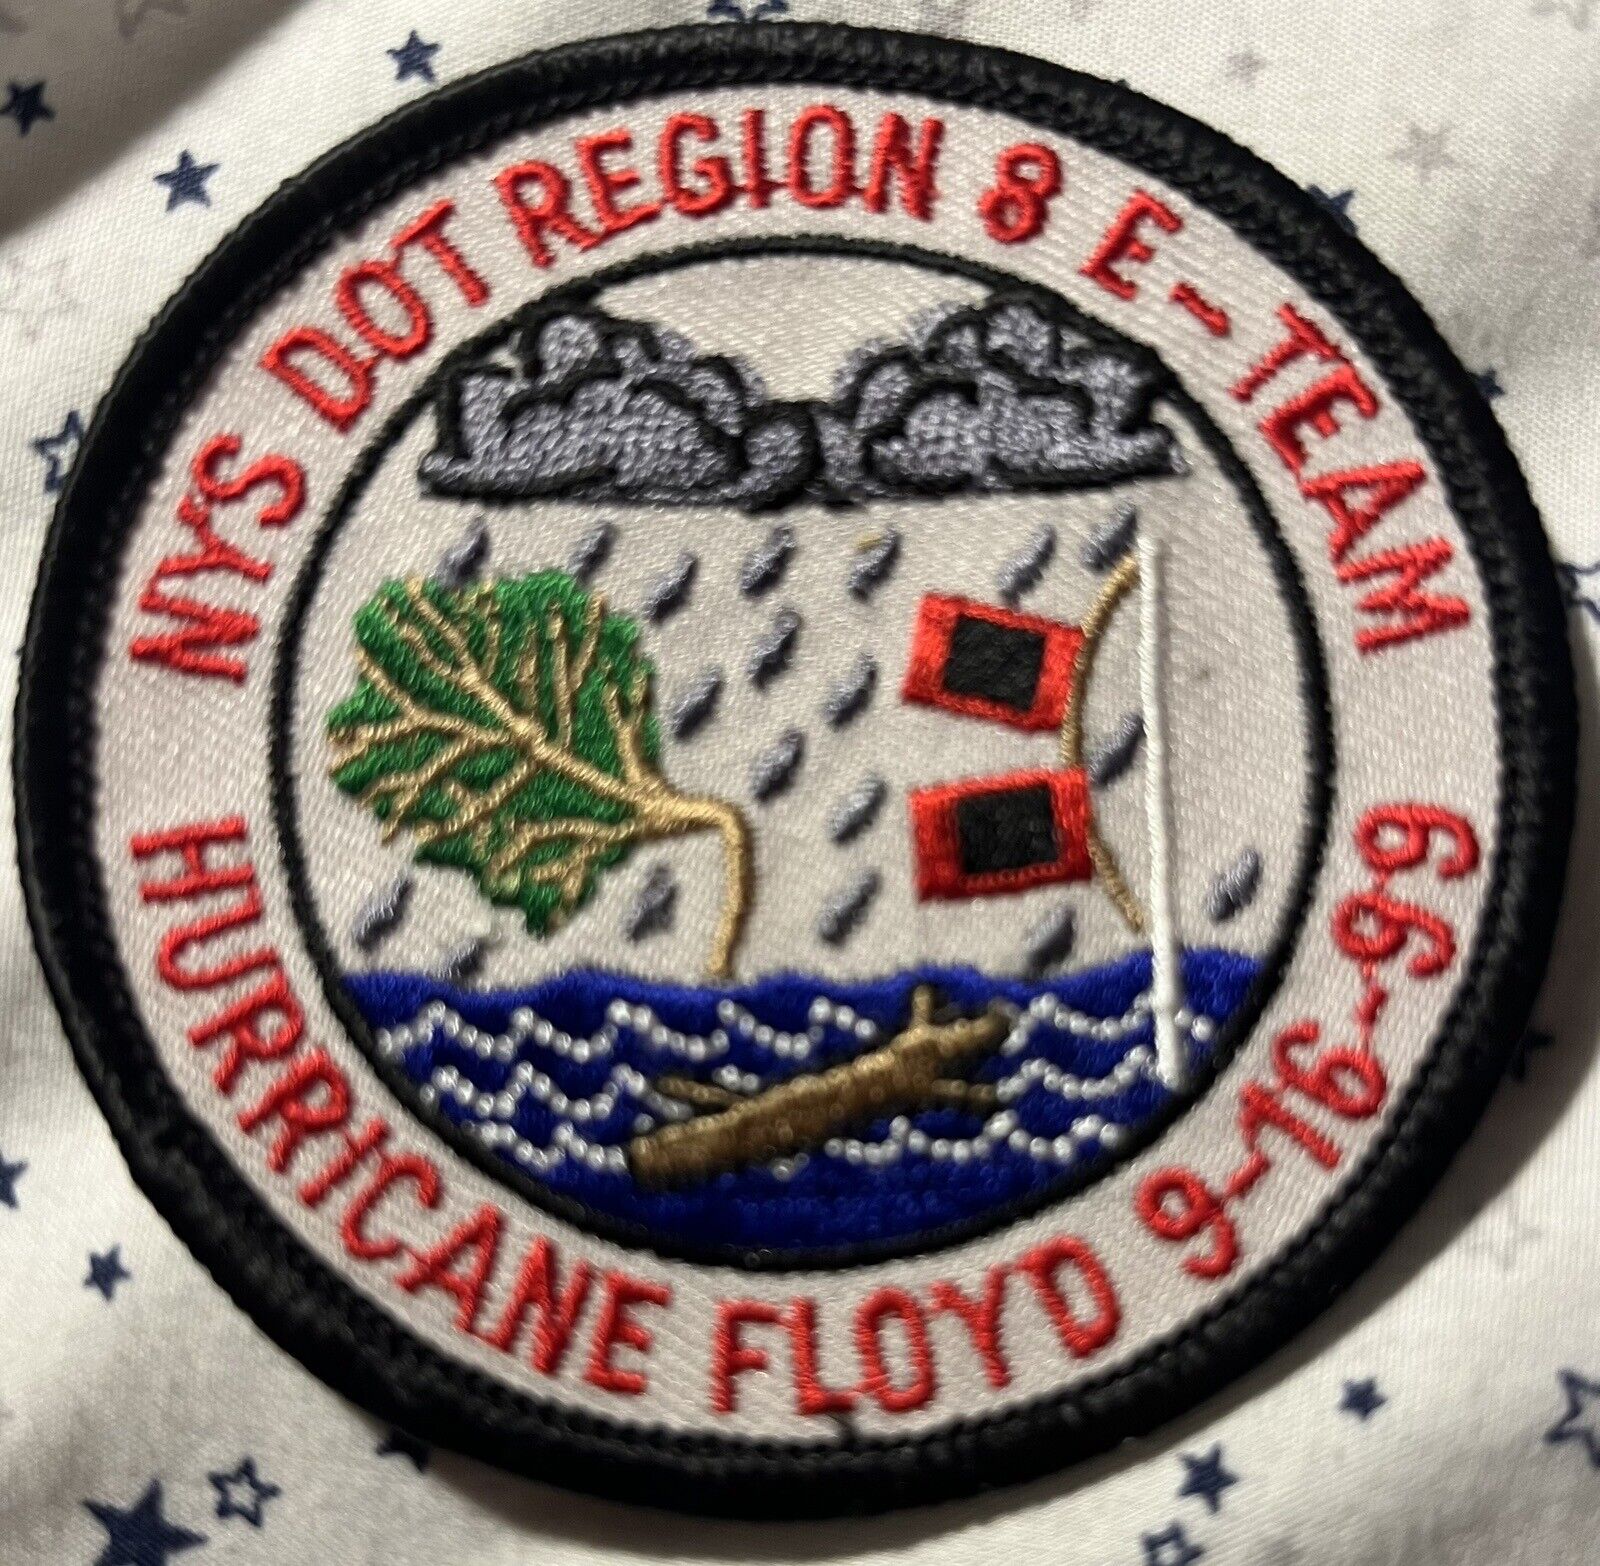 NYS DOT Region 8 E - Team Hurricane Floyd Patch 9-16-99